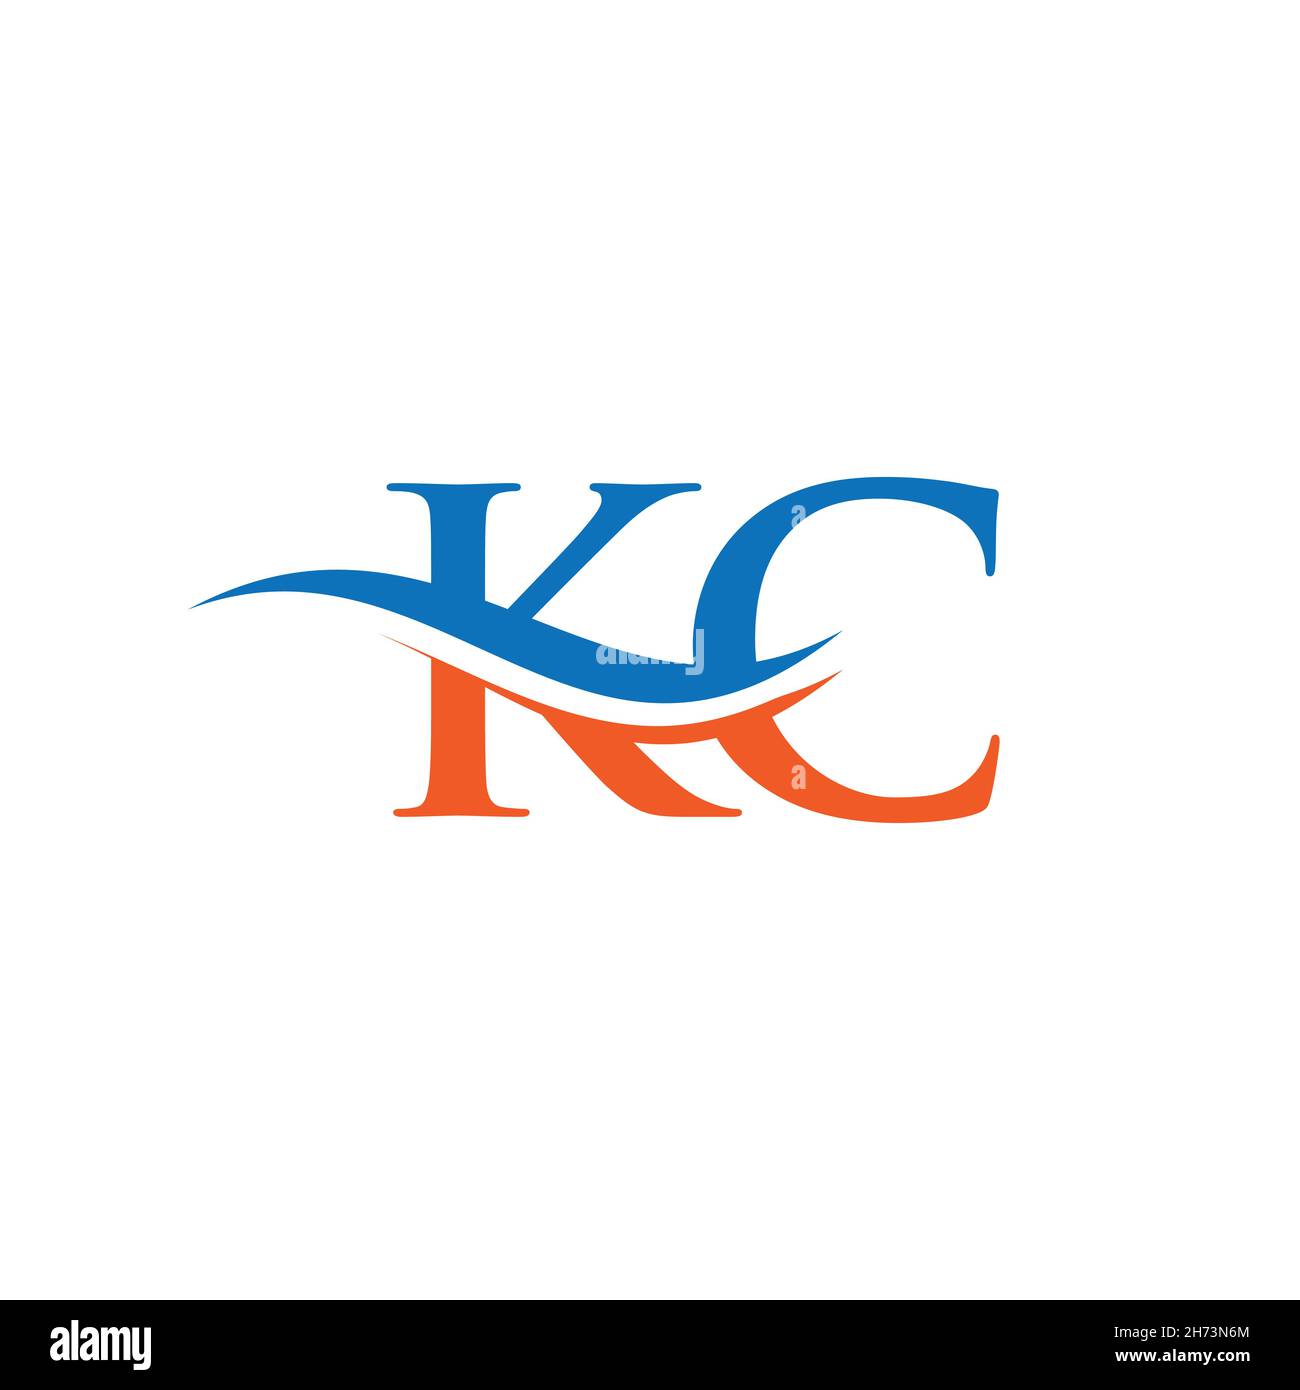 Letter K Logo Vector PNG Images, Gold Letter K Logo Kc Letter Design Vector  With Golden Colors, Com Con, Icon, Kc PNG Image For Free Download